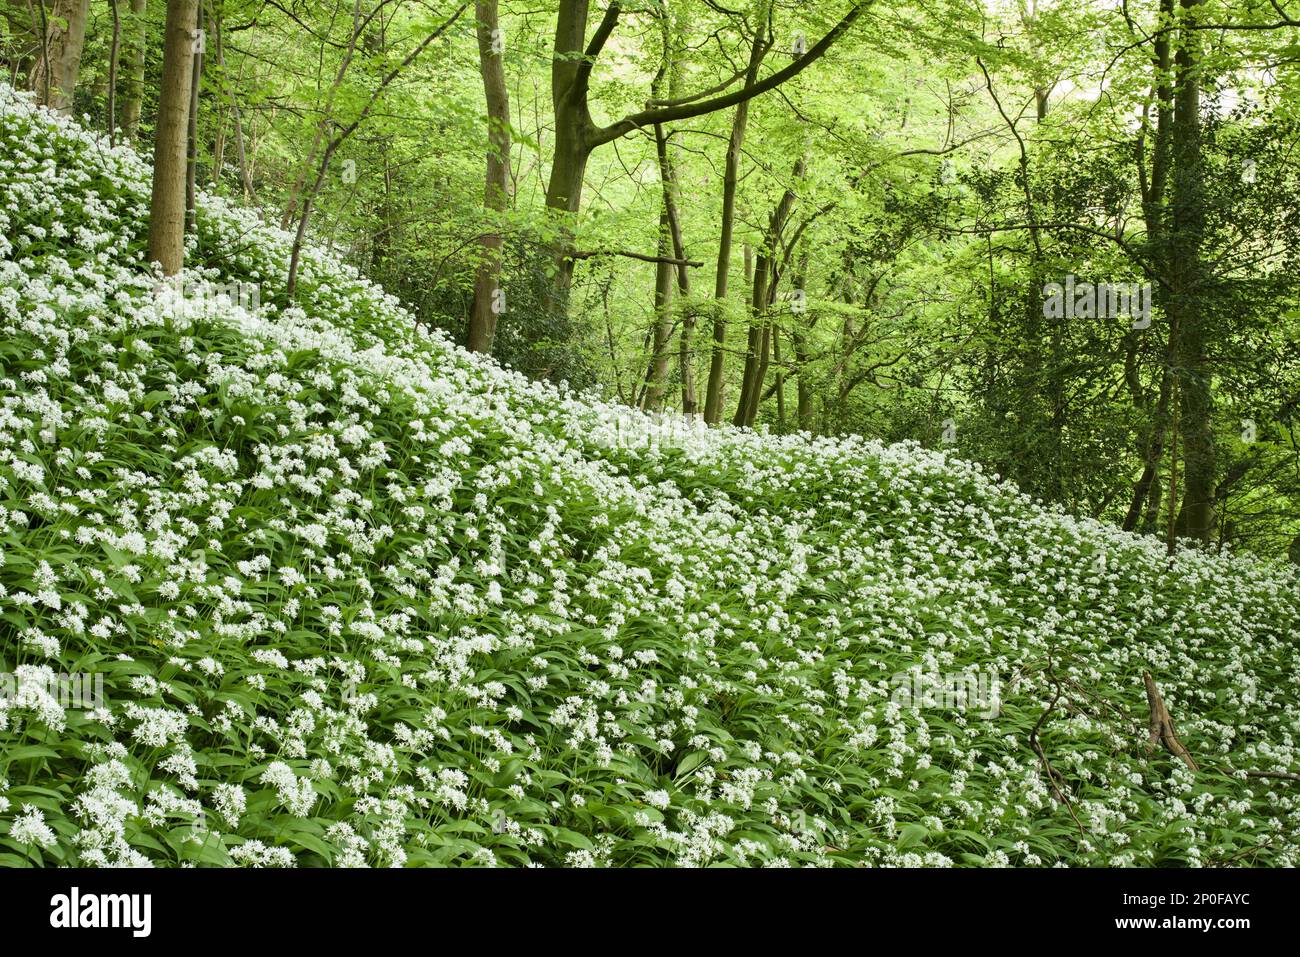 Flower mass of ramsons (Allium ursinum), growing in old deciduous woods, Ilam, Staffordshire, England, United Kingdom Stock Photo